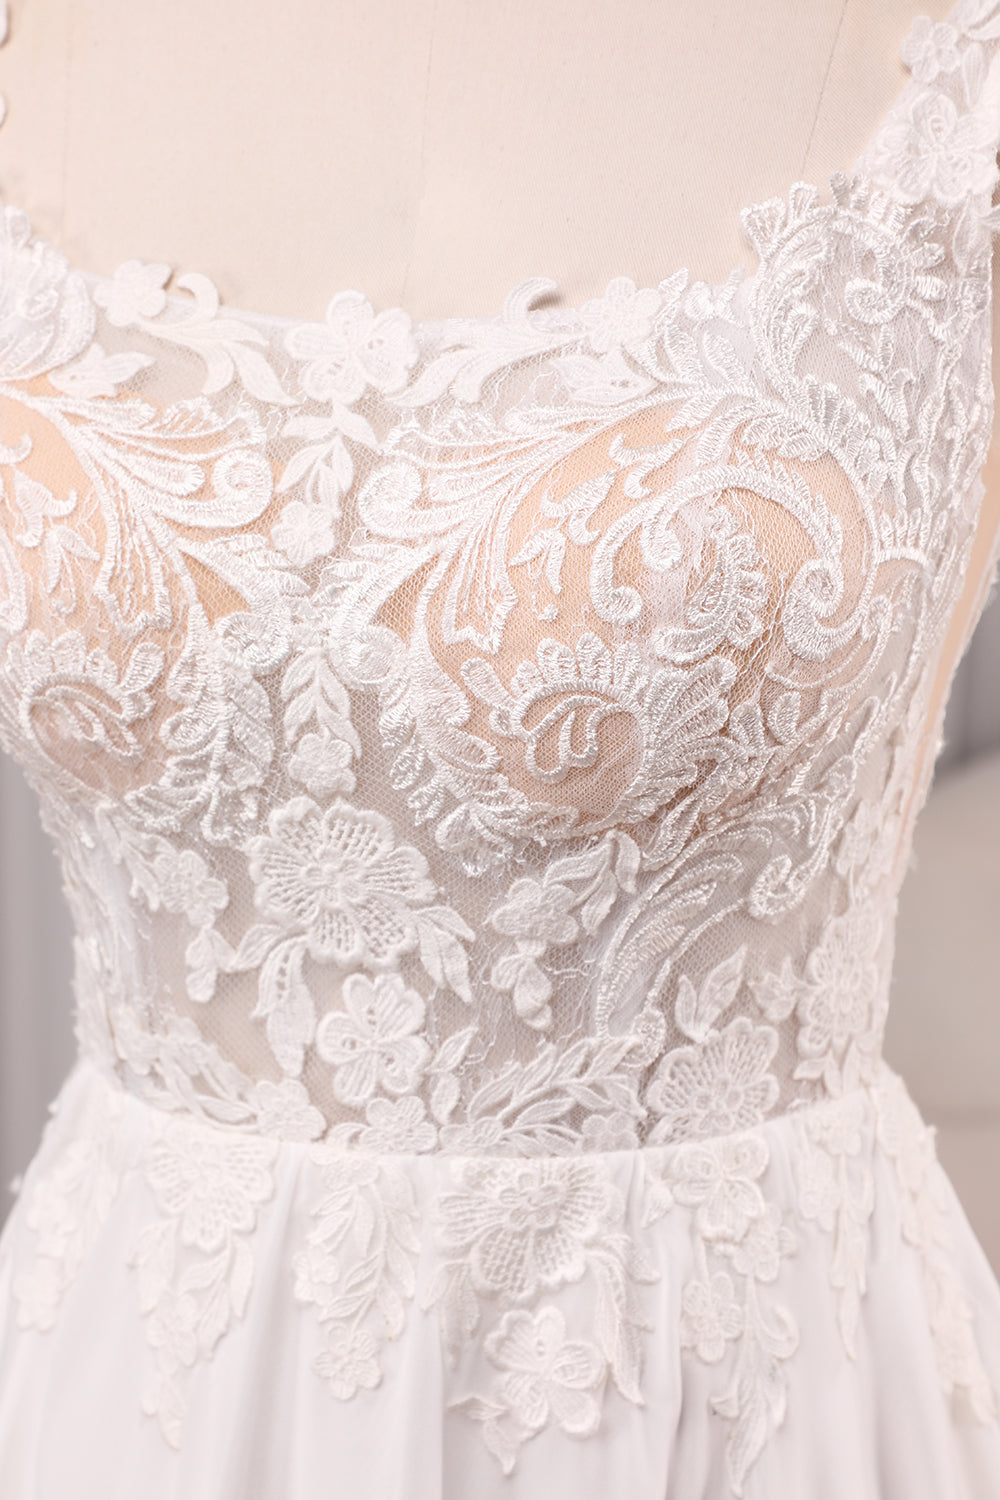 Ivory A Line Square Neck Corset Court Train Bridal Dress With Slit